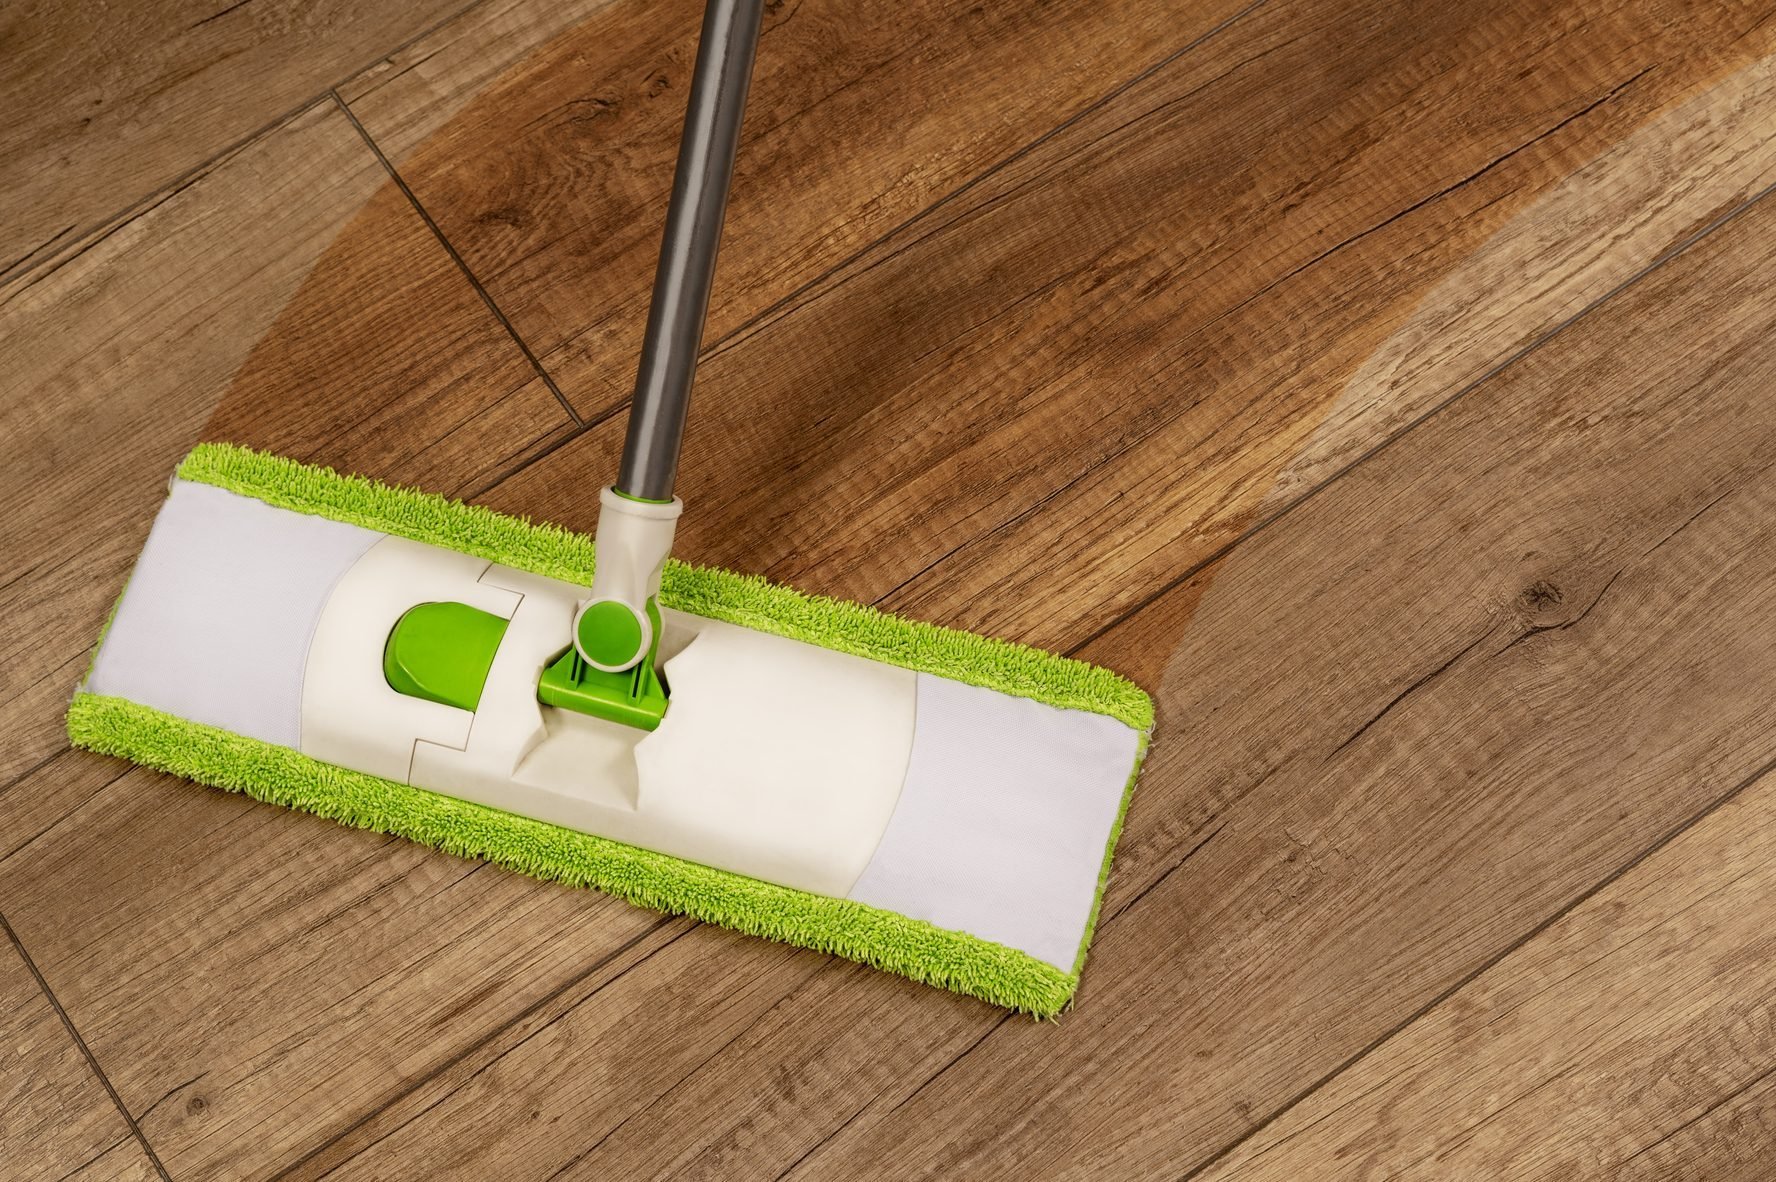 How to Clean Salt Off Wood Floors and Laminate Floors